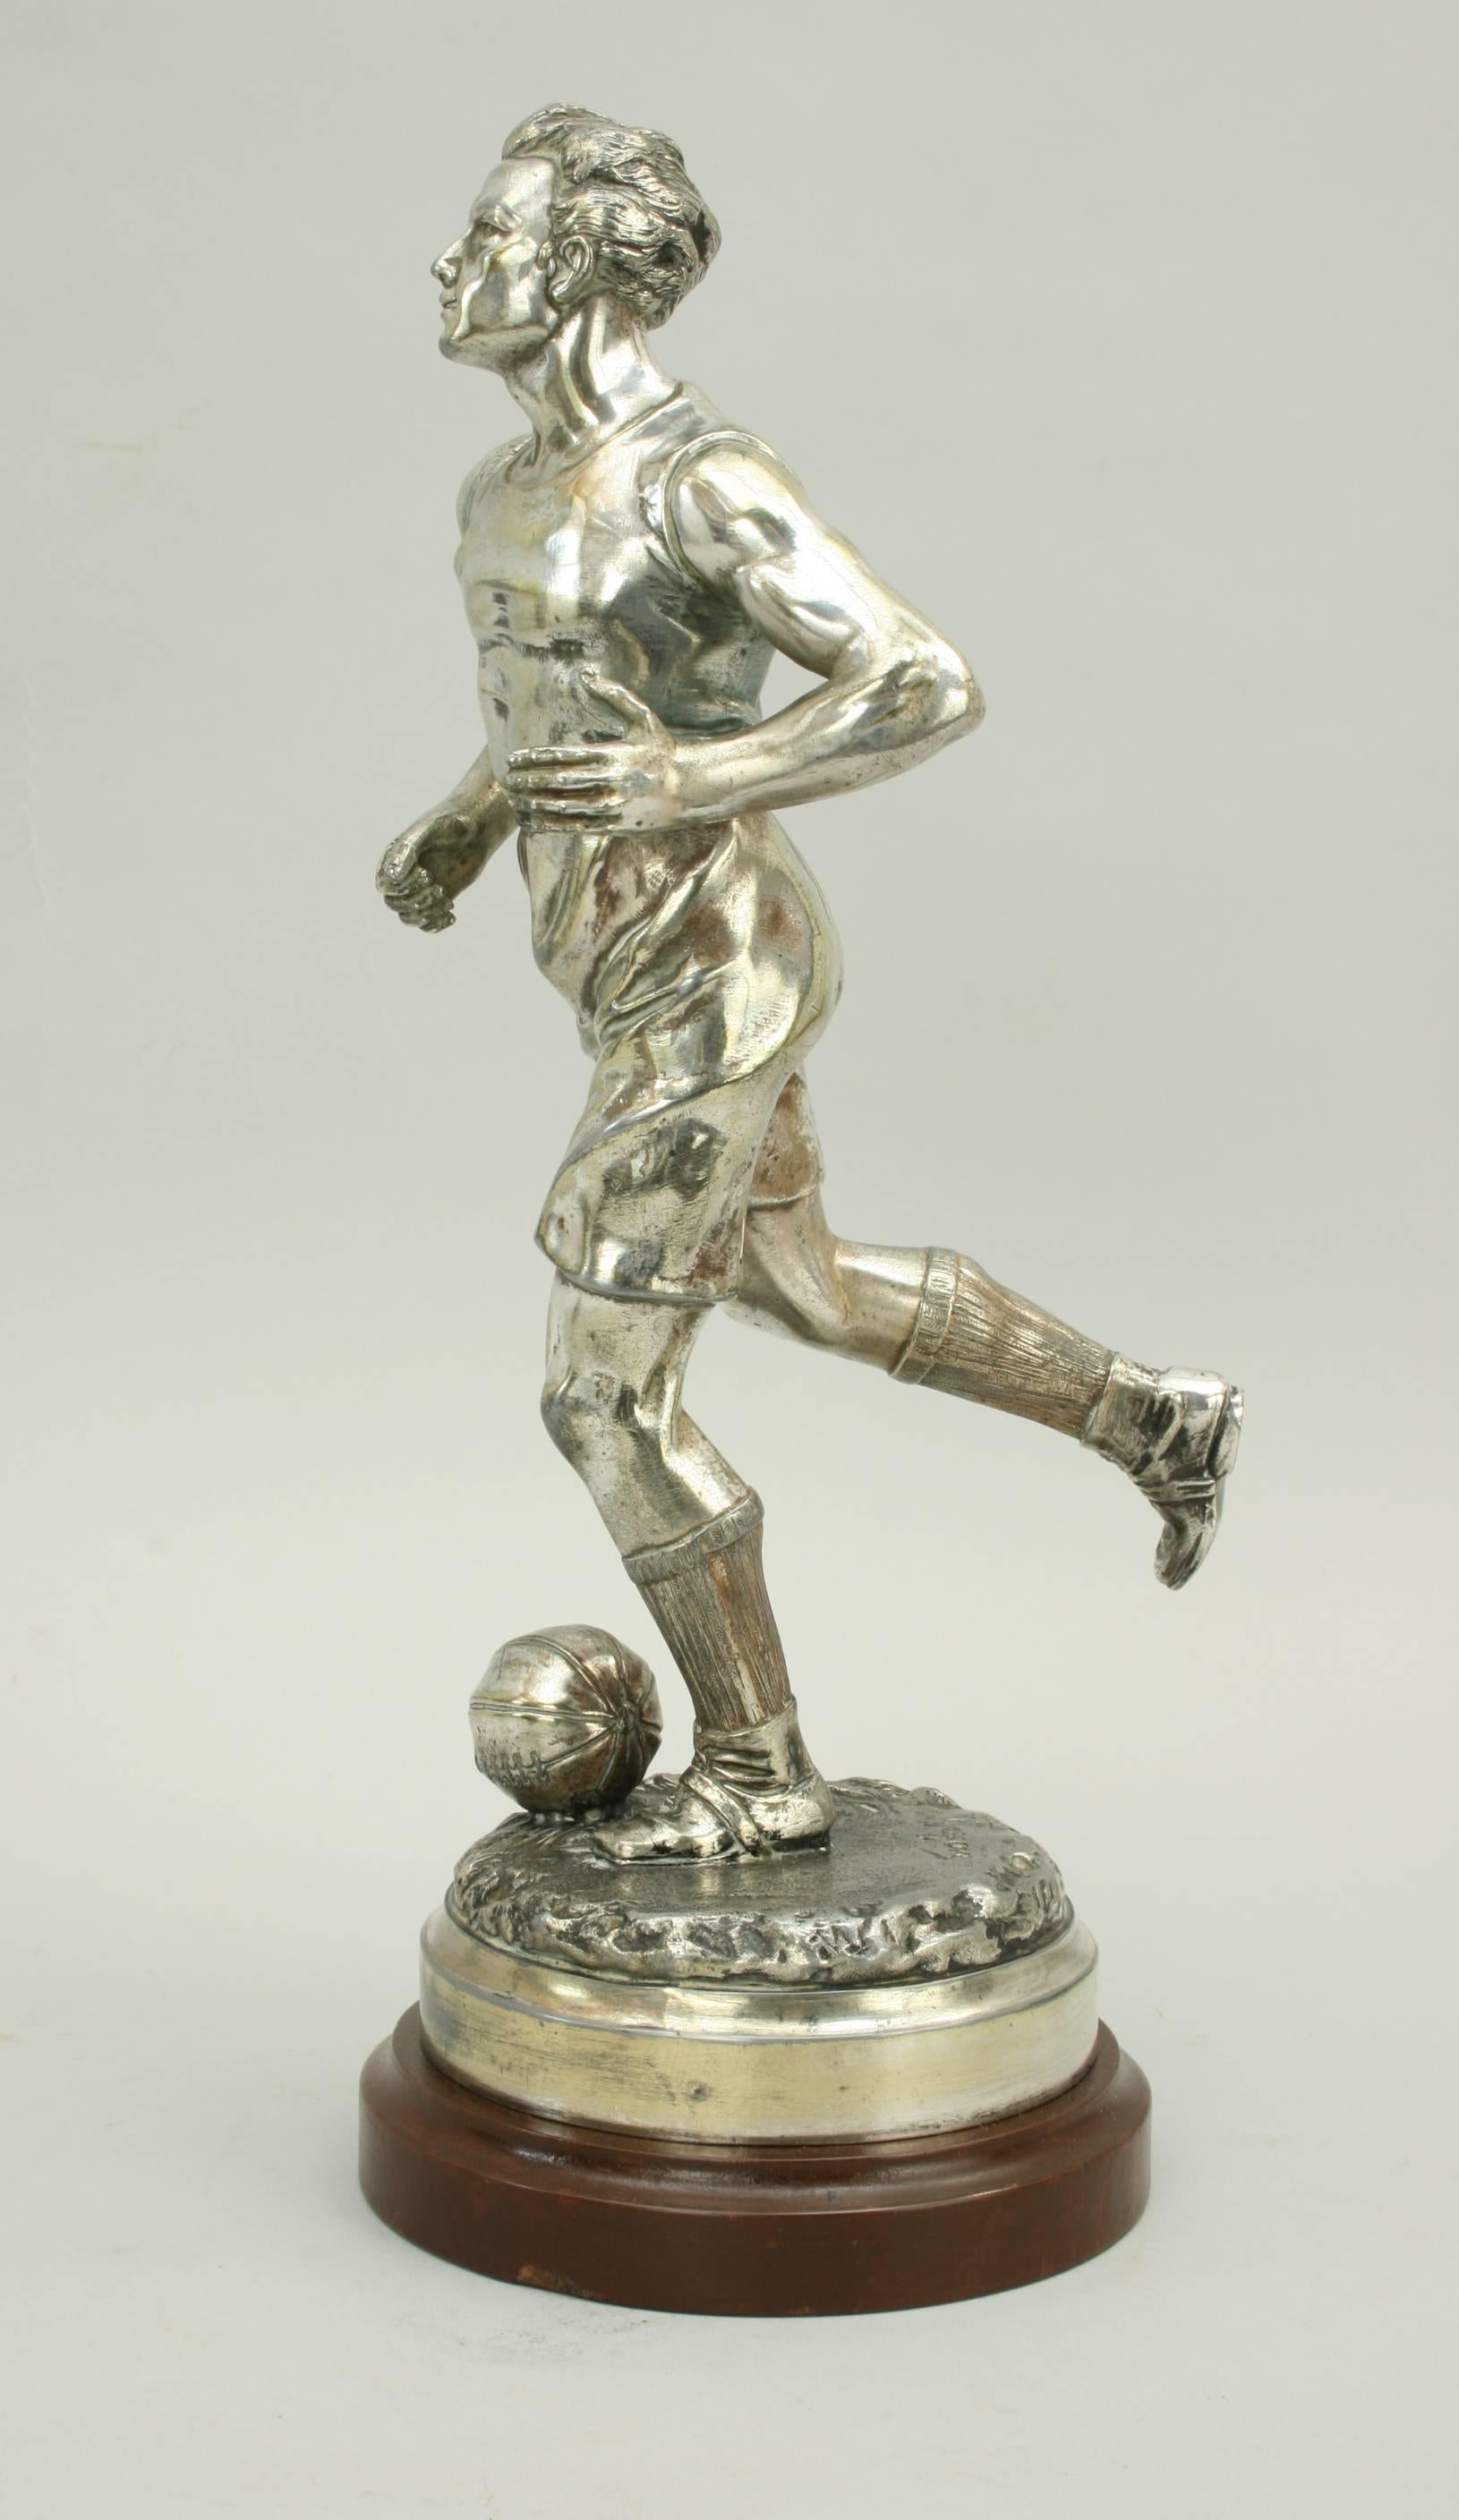 Early 20th Century Vintage Football Figure